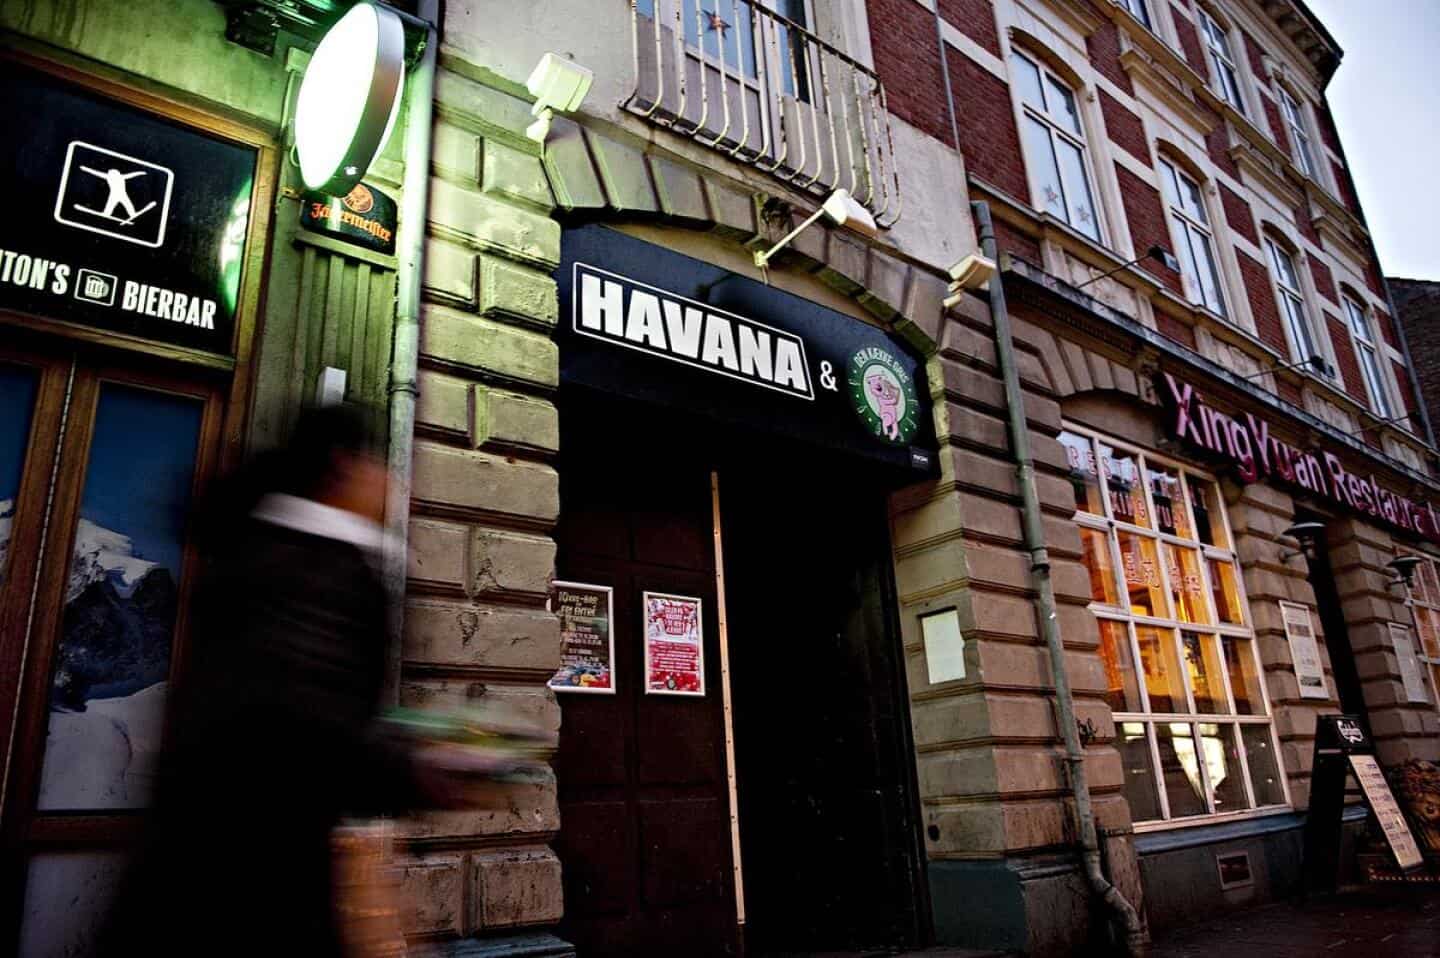 Havana lukker i Esbjerg